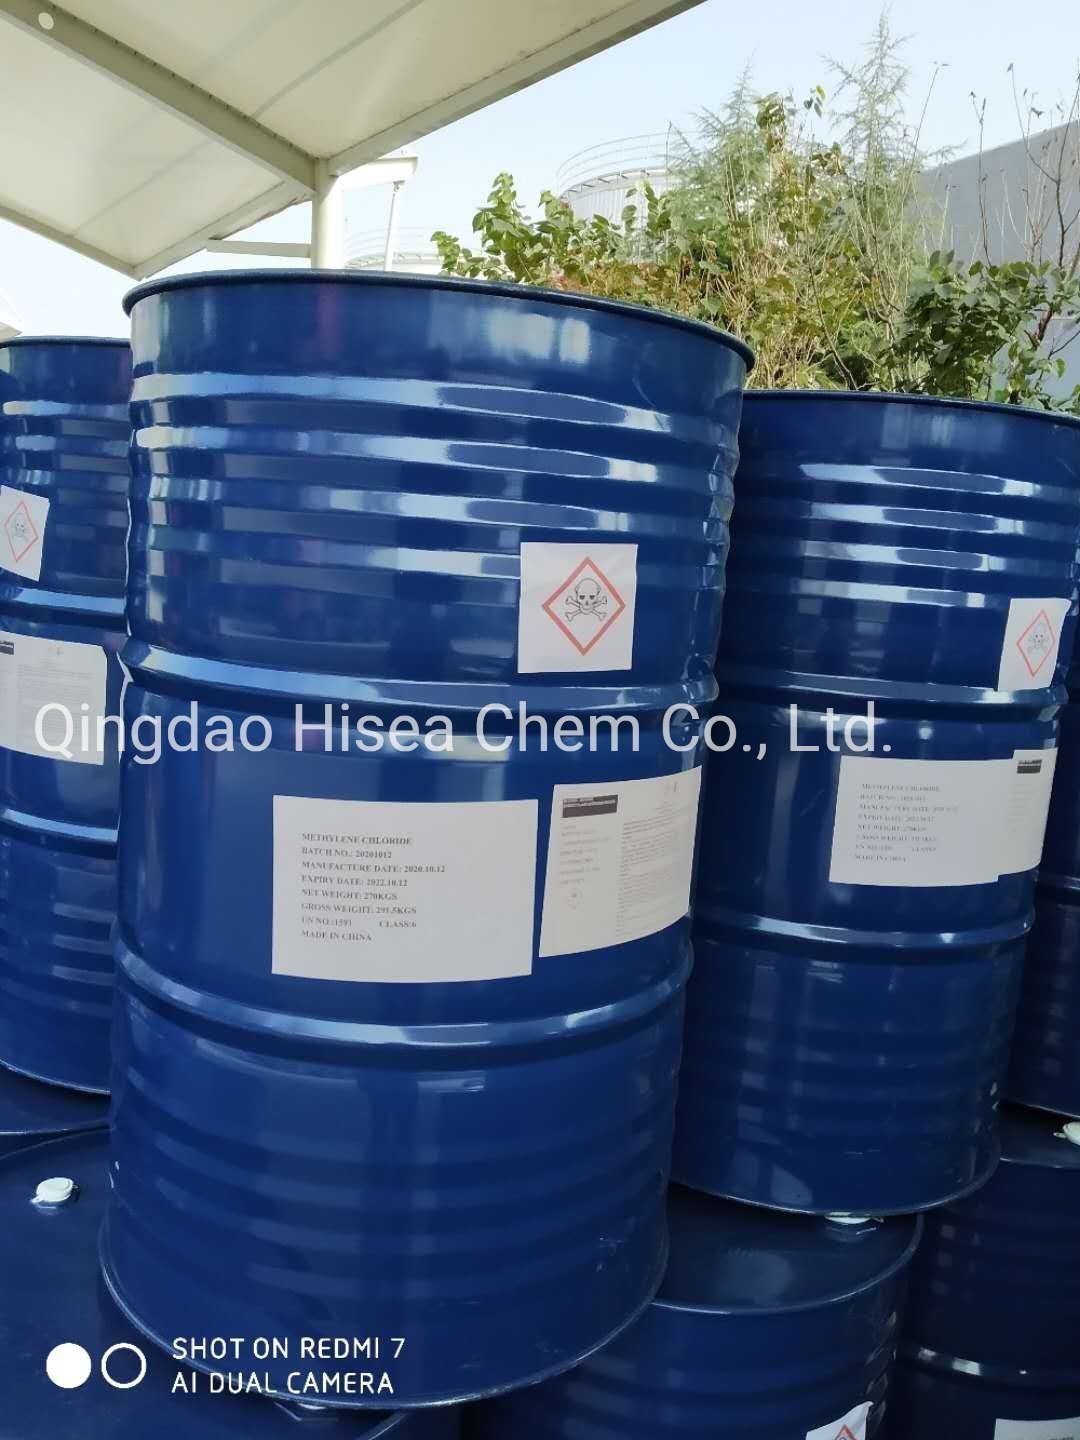 Carbonato de dimetila/DMC CAS 616-38-6 para revestimentos, adesivos e agentes de limpeza